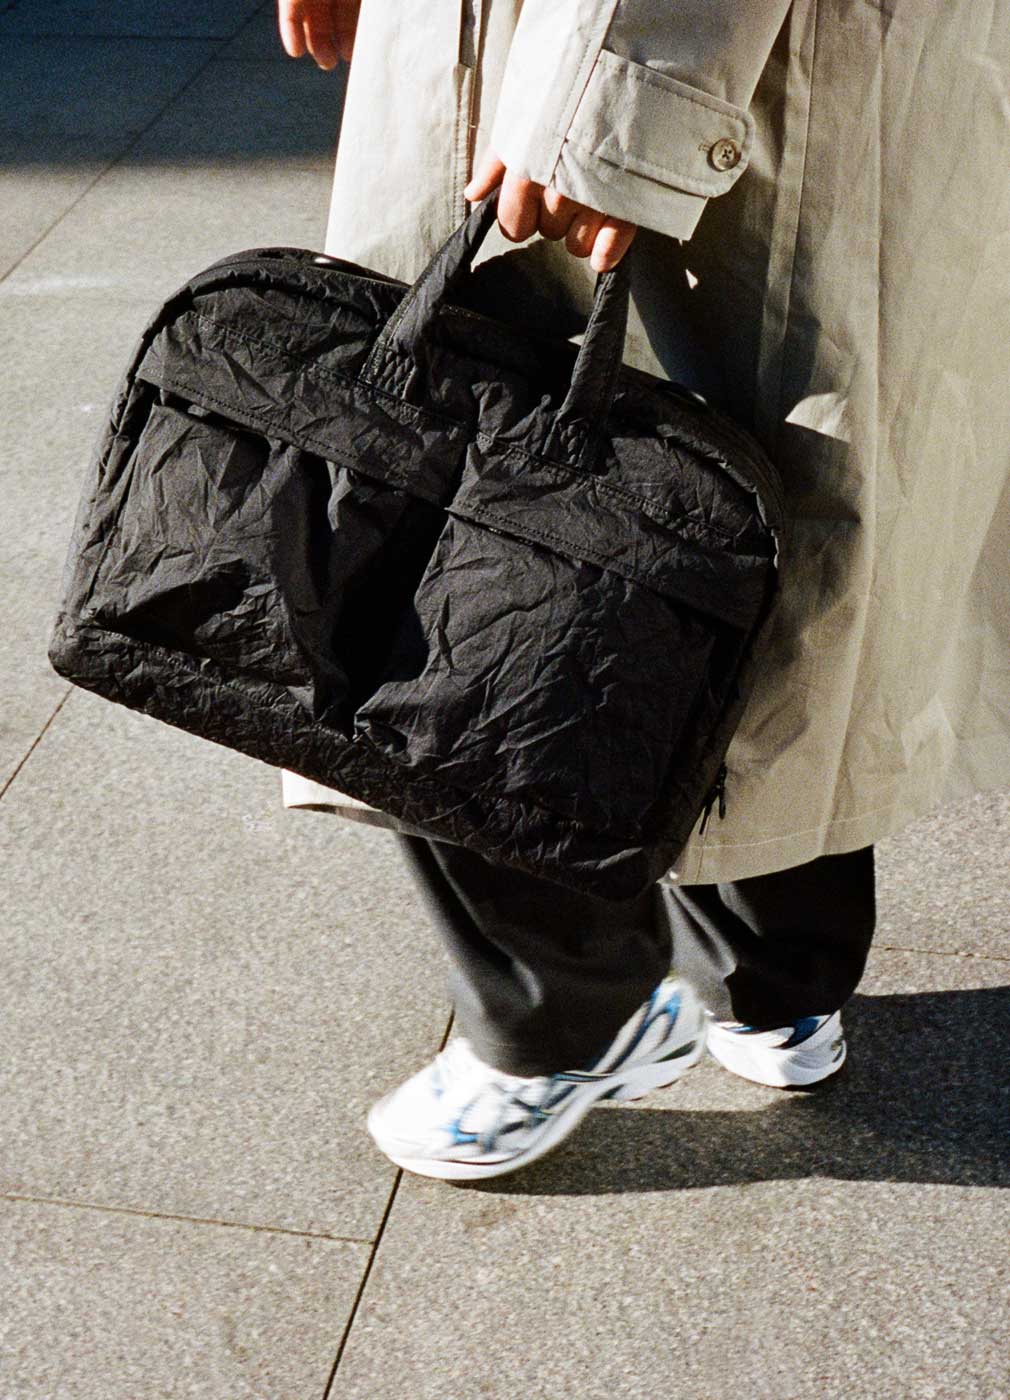 mfpen & Korean Brand BLANKOF Drop Beautifully Boring Bags